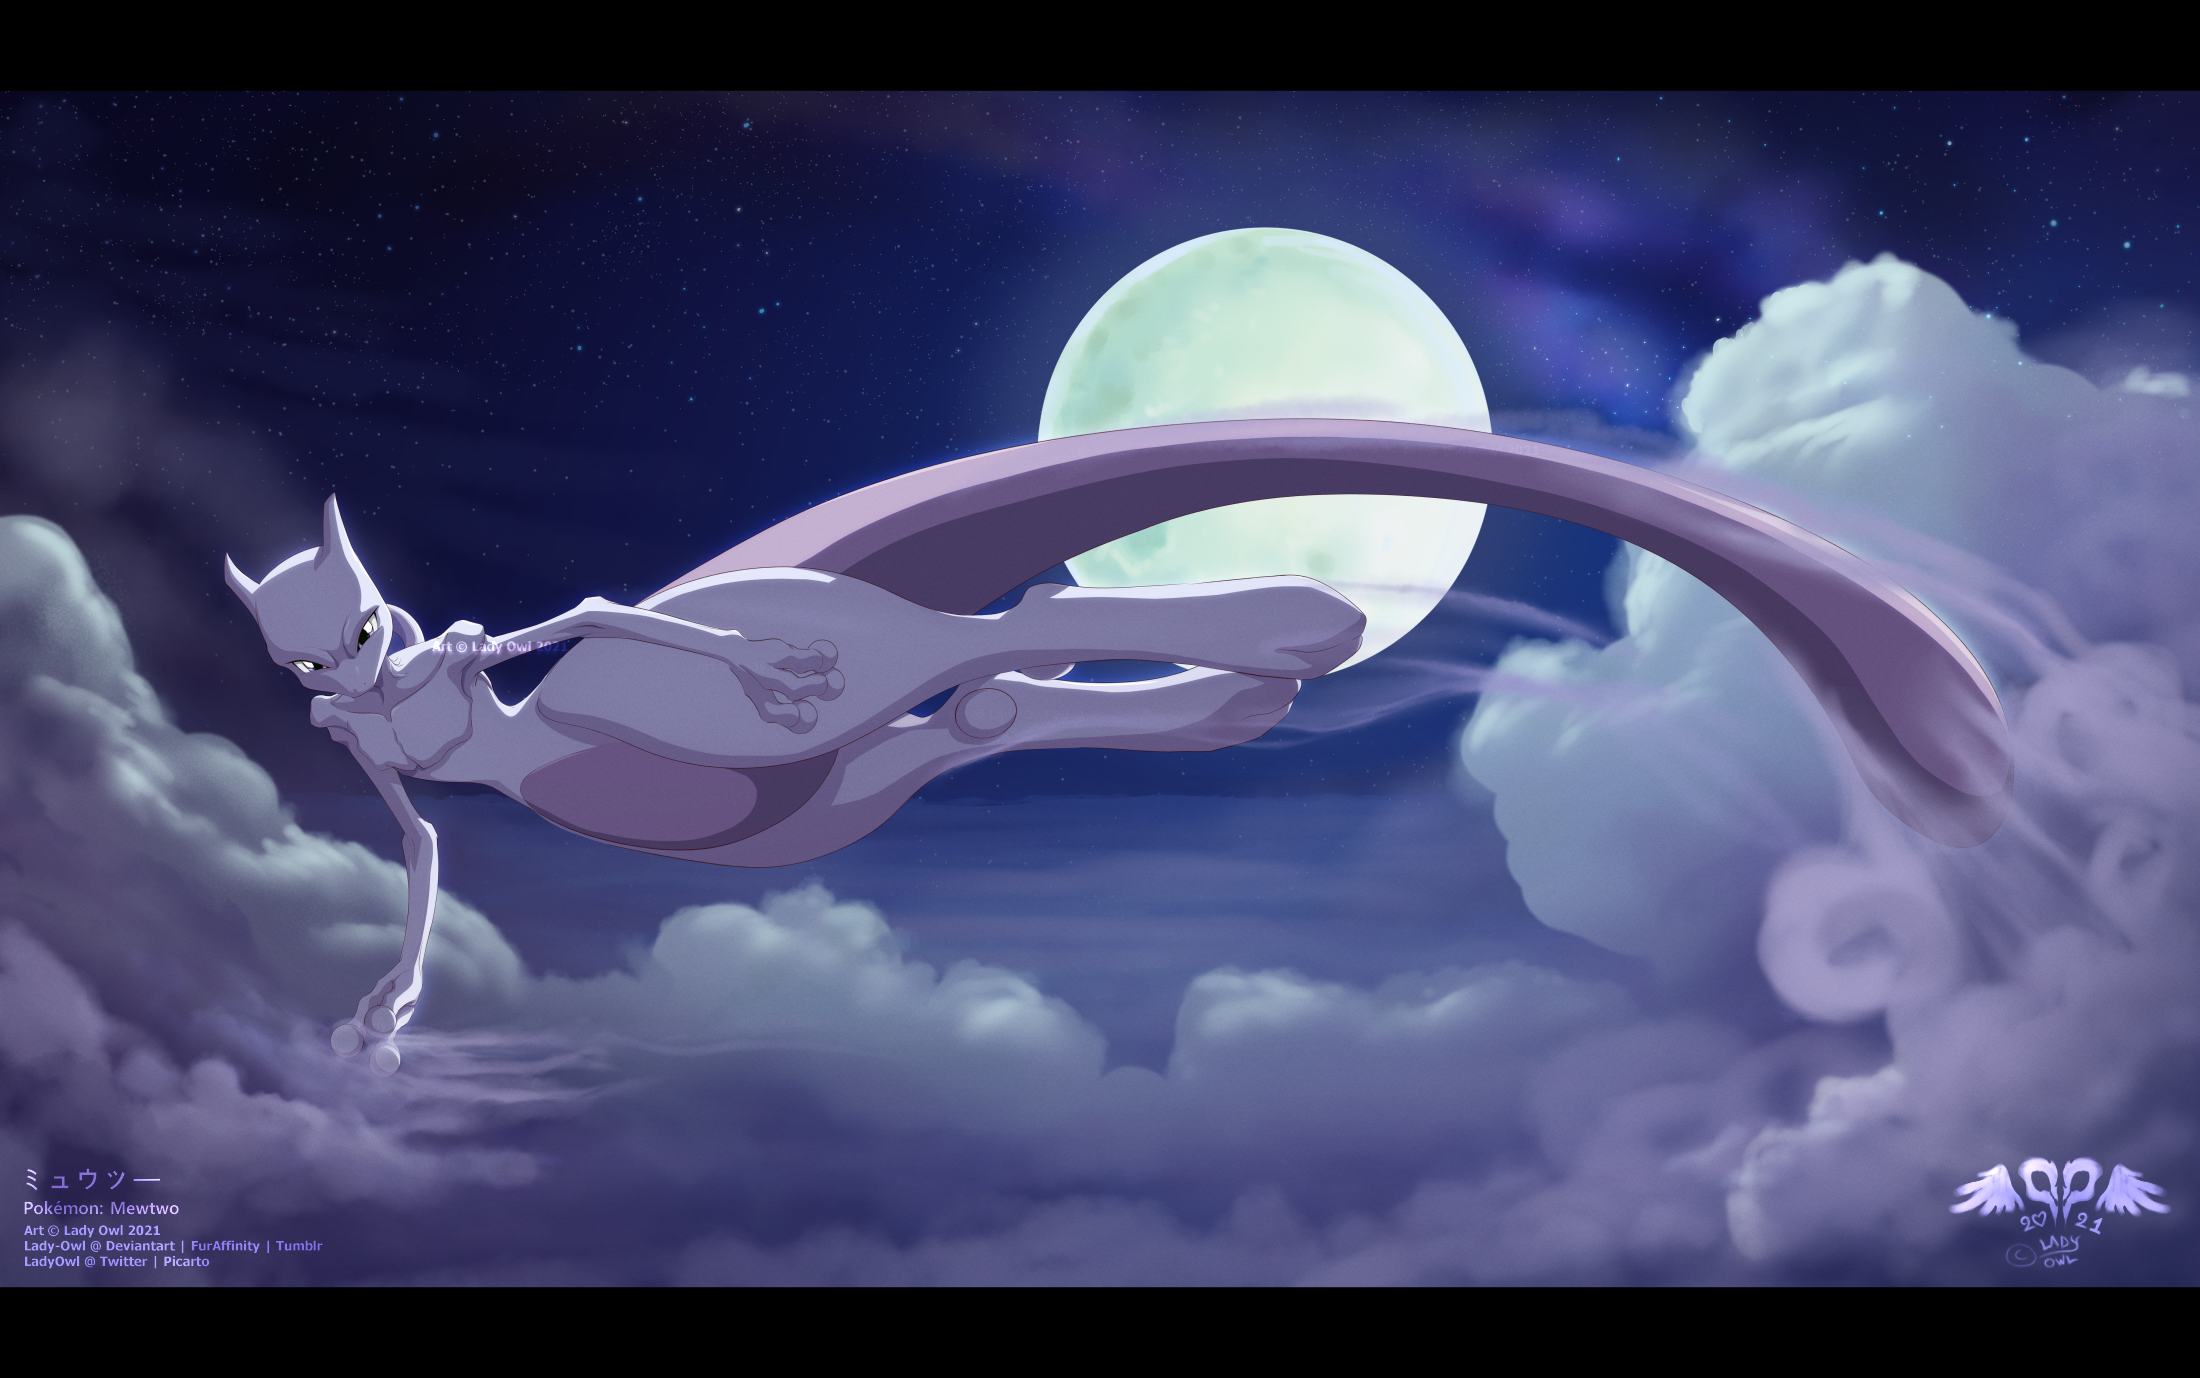 Mew pokemon flying in the sky